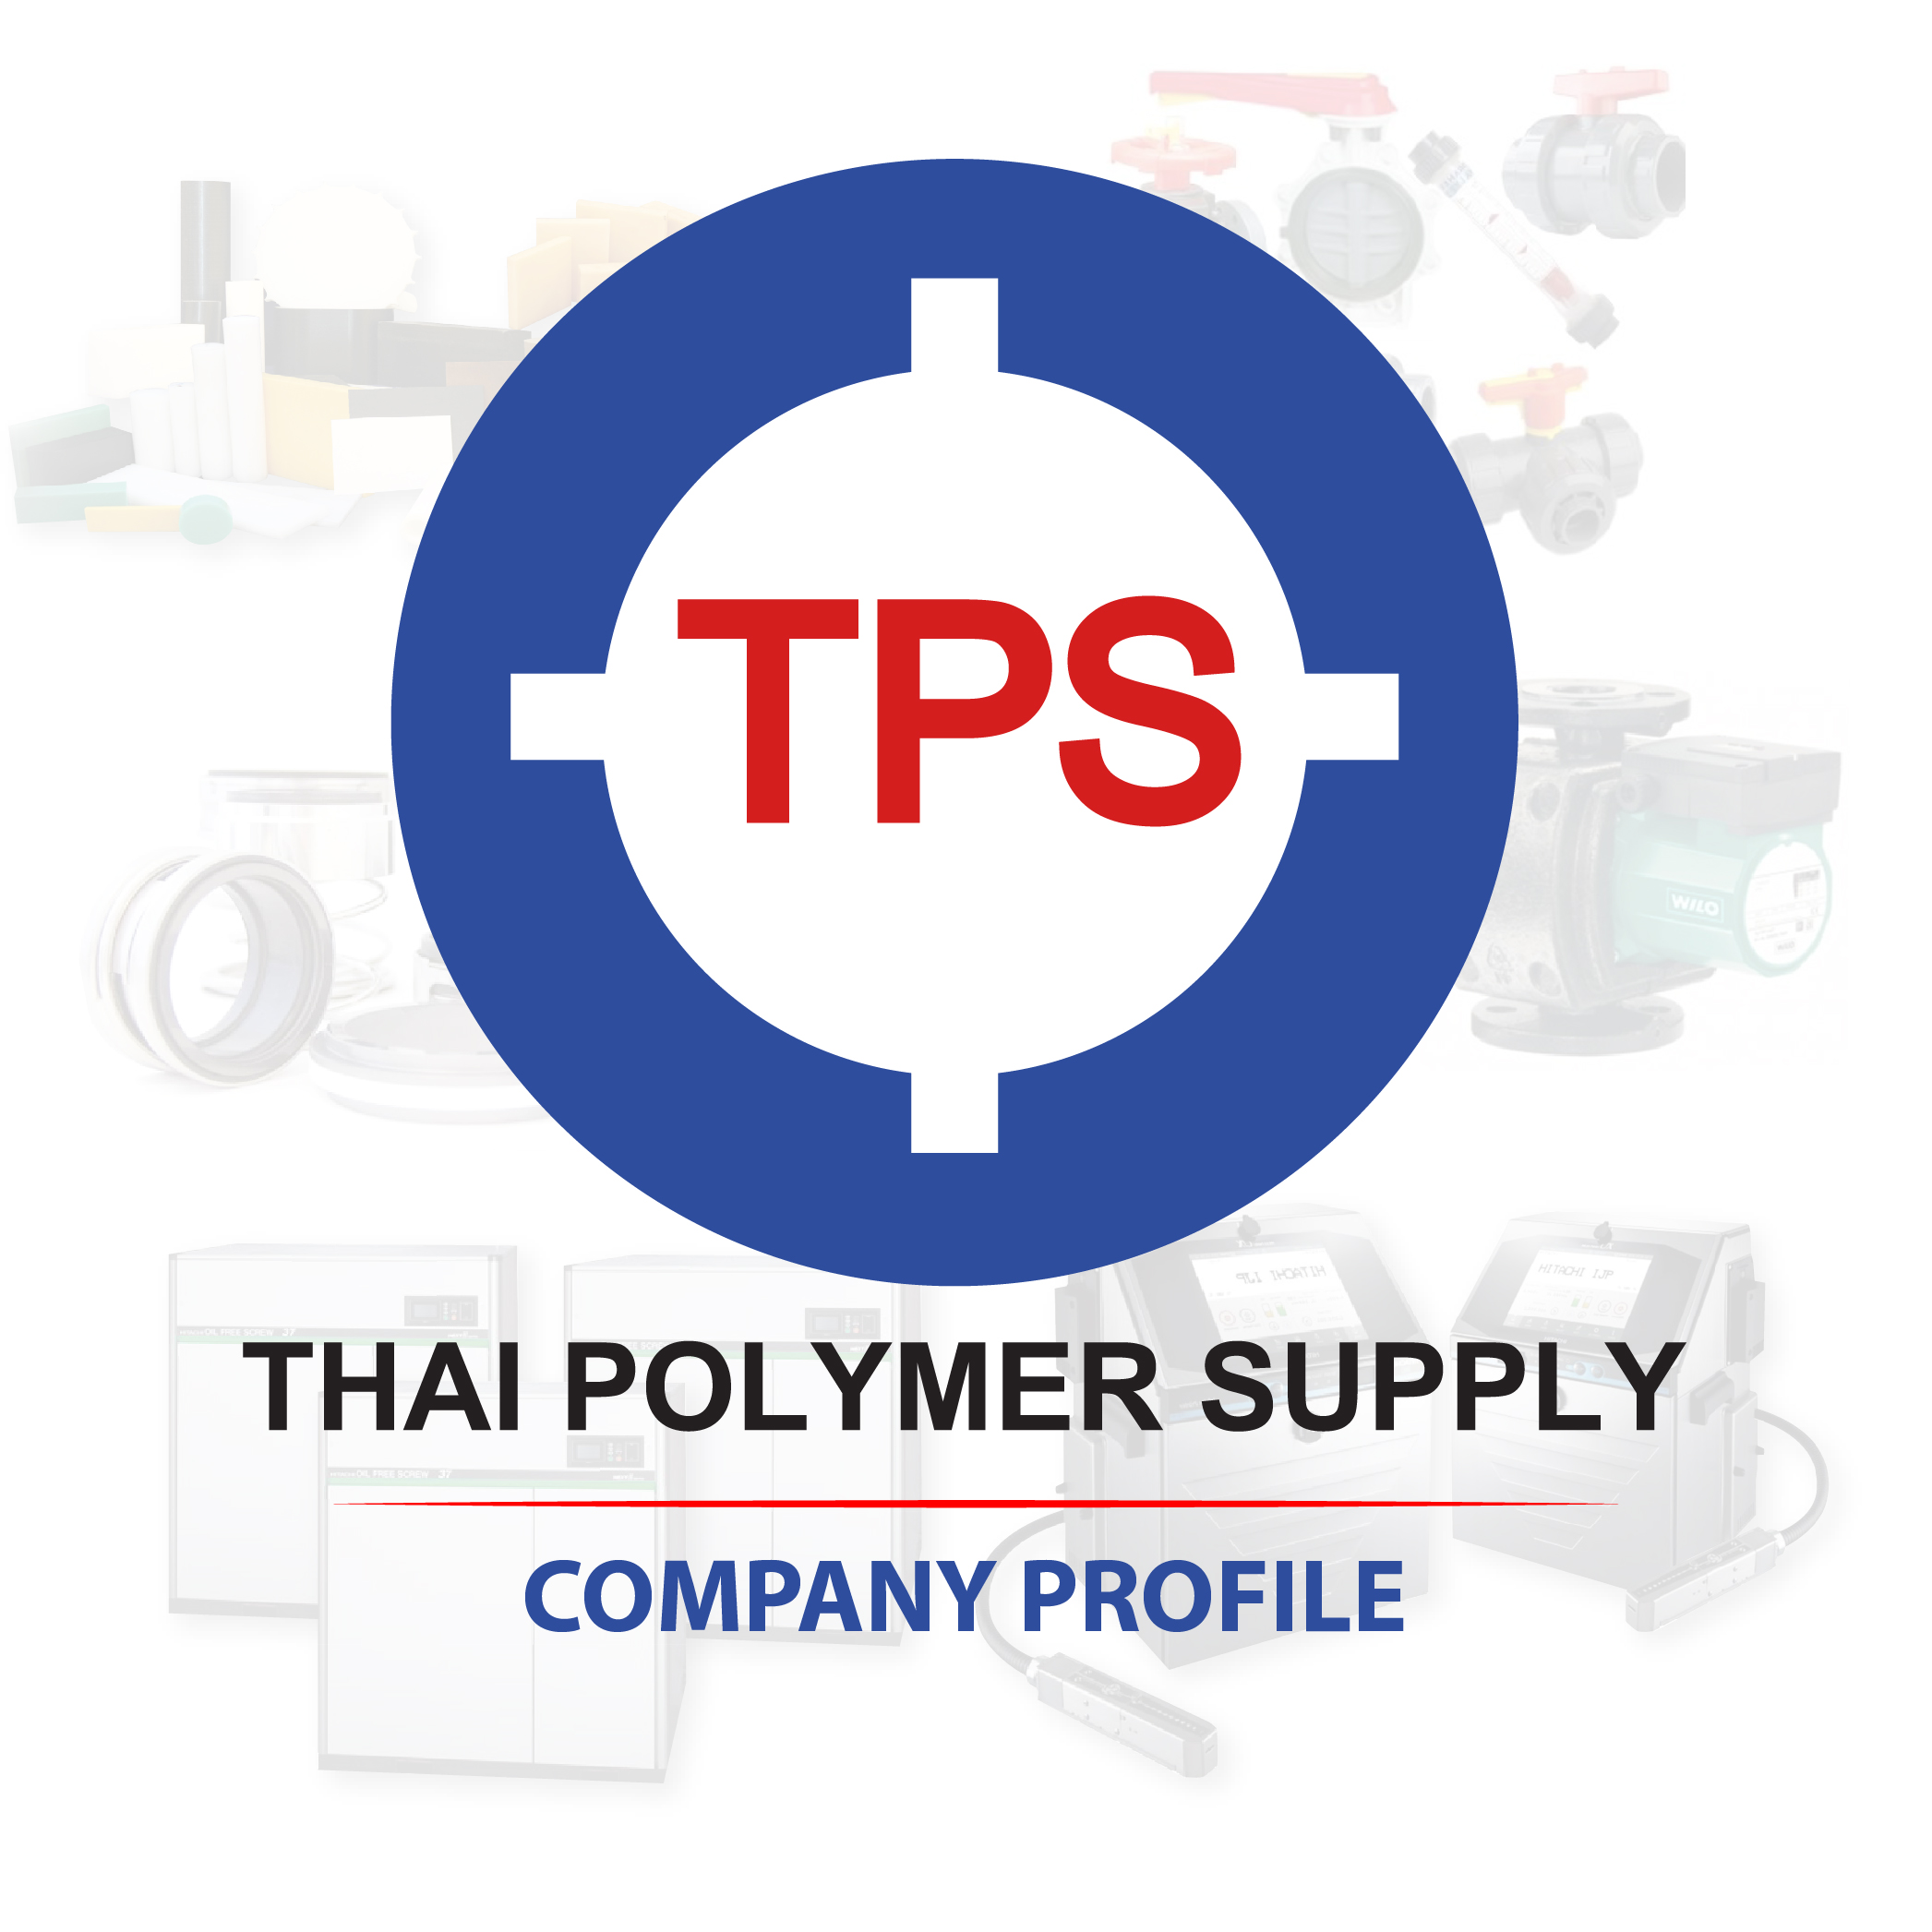 COMPANY PROFILE - thaipolymer